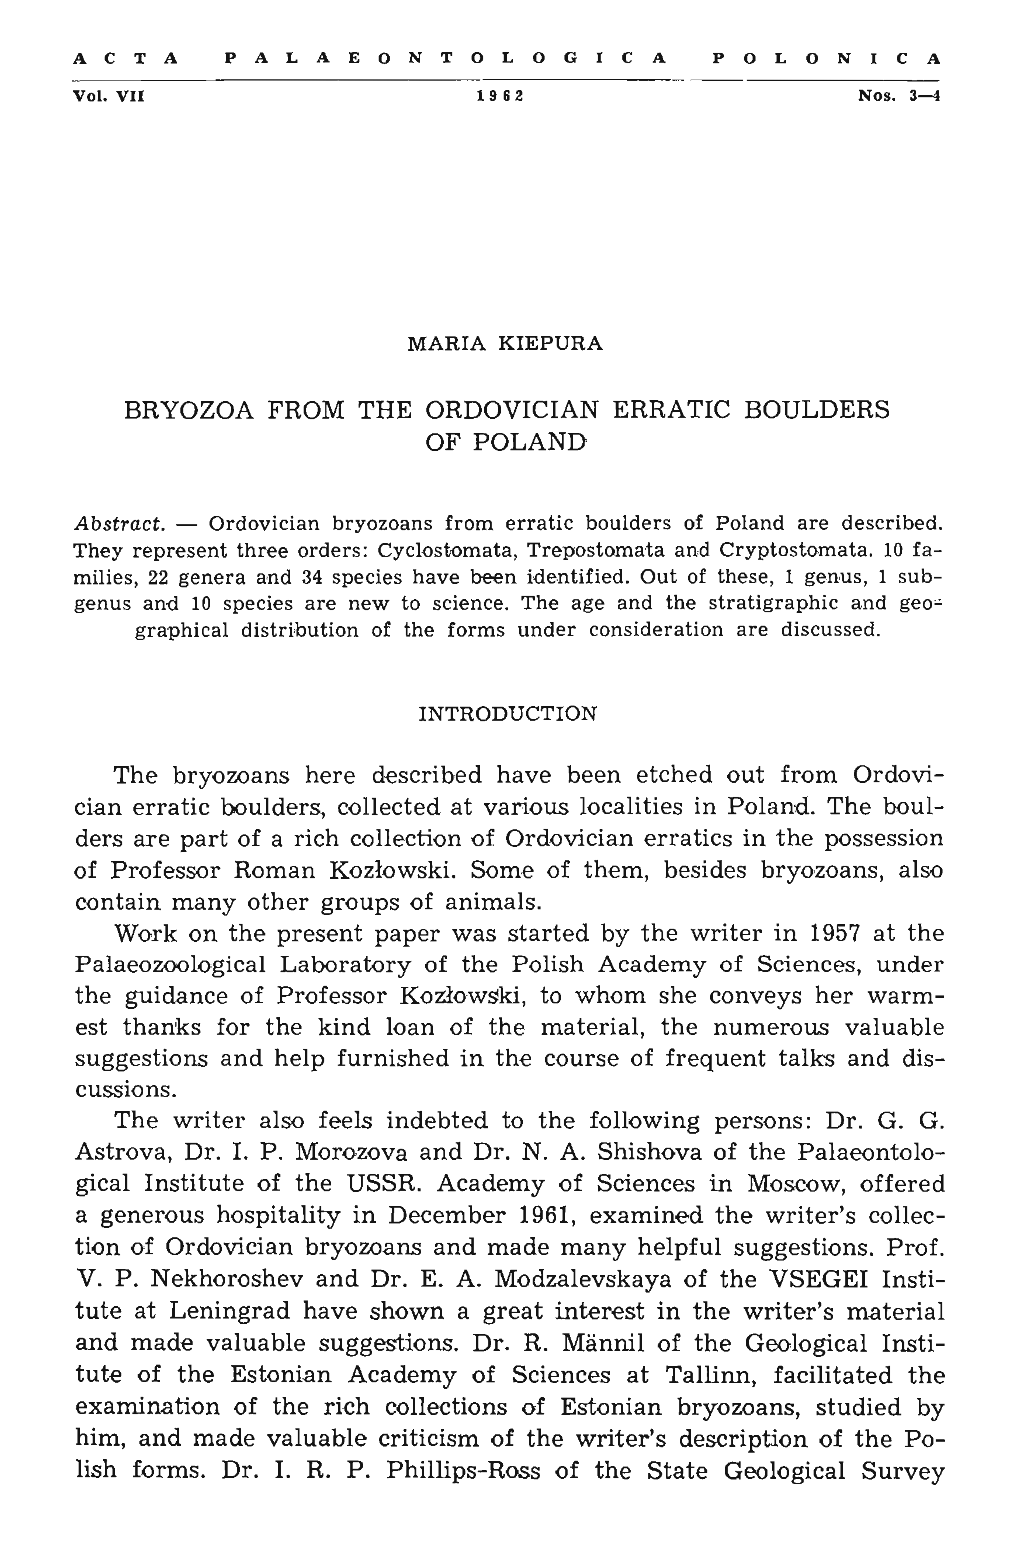 Bryozoa from the Ordovician Erratic Boulders of Poland